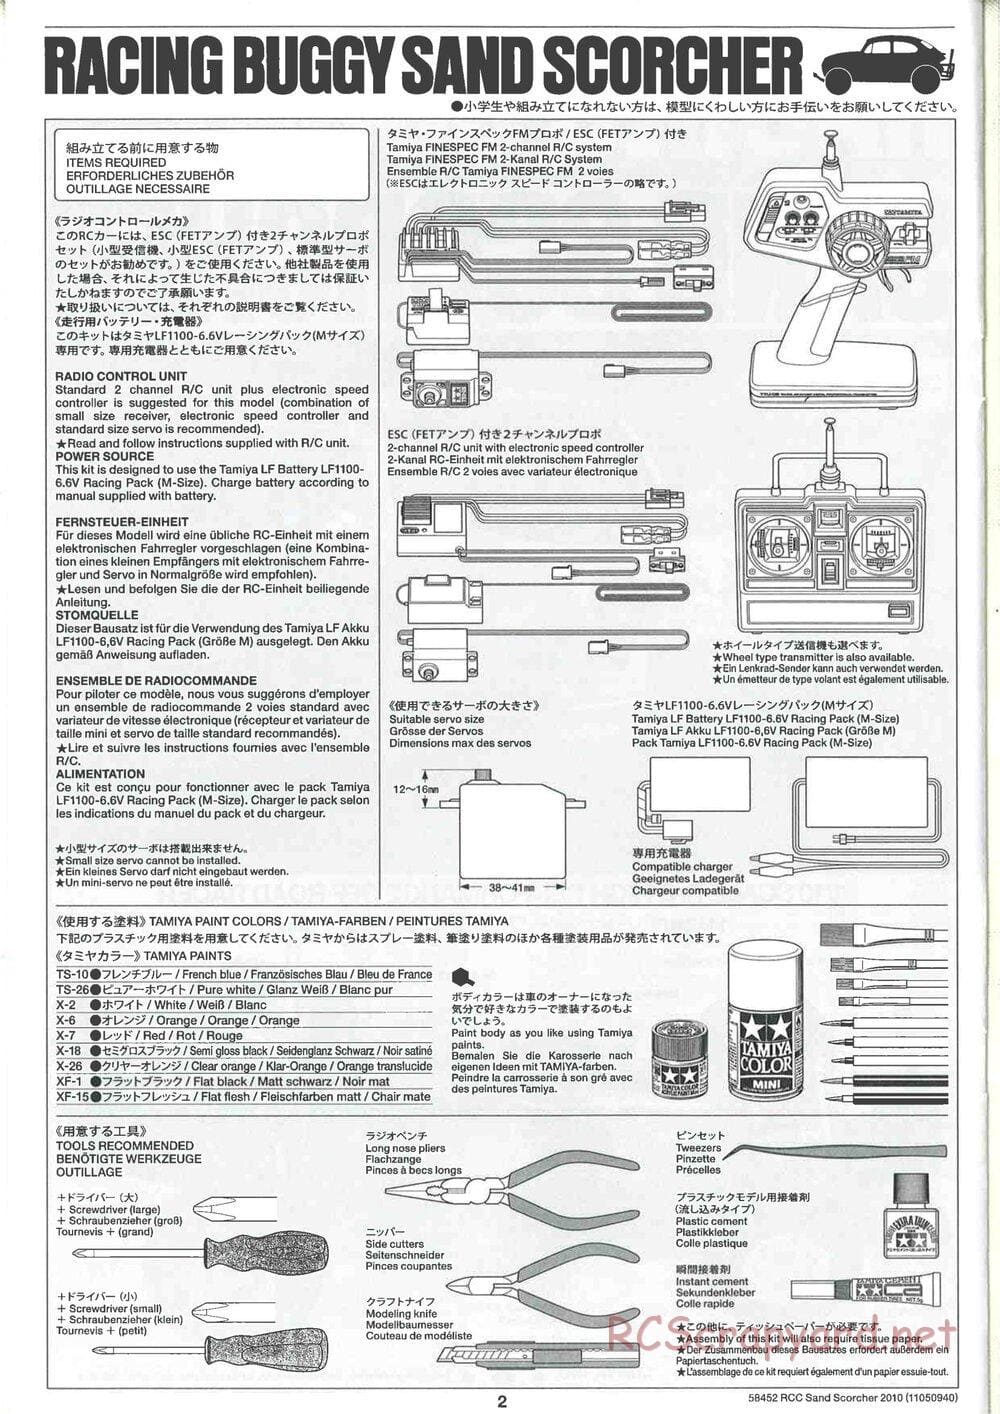 Tamiya - Sand Scorcher 2010 - SRB v1 Chassis - Manual - Page 2